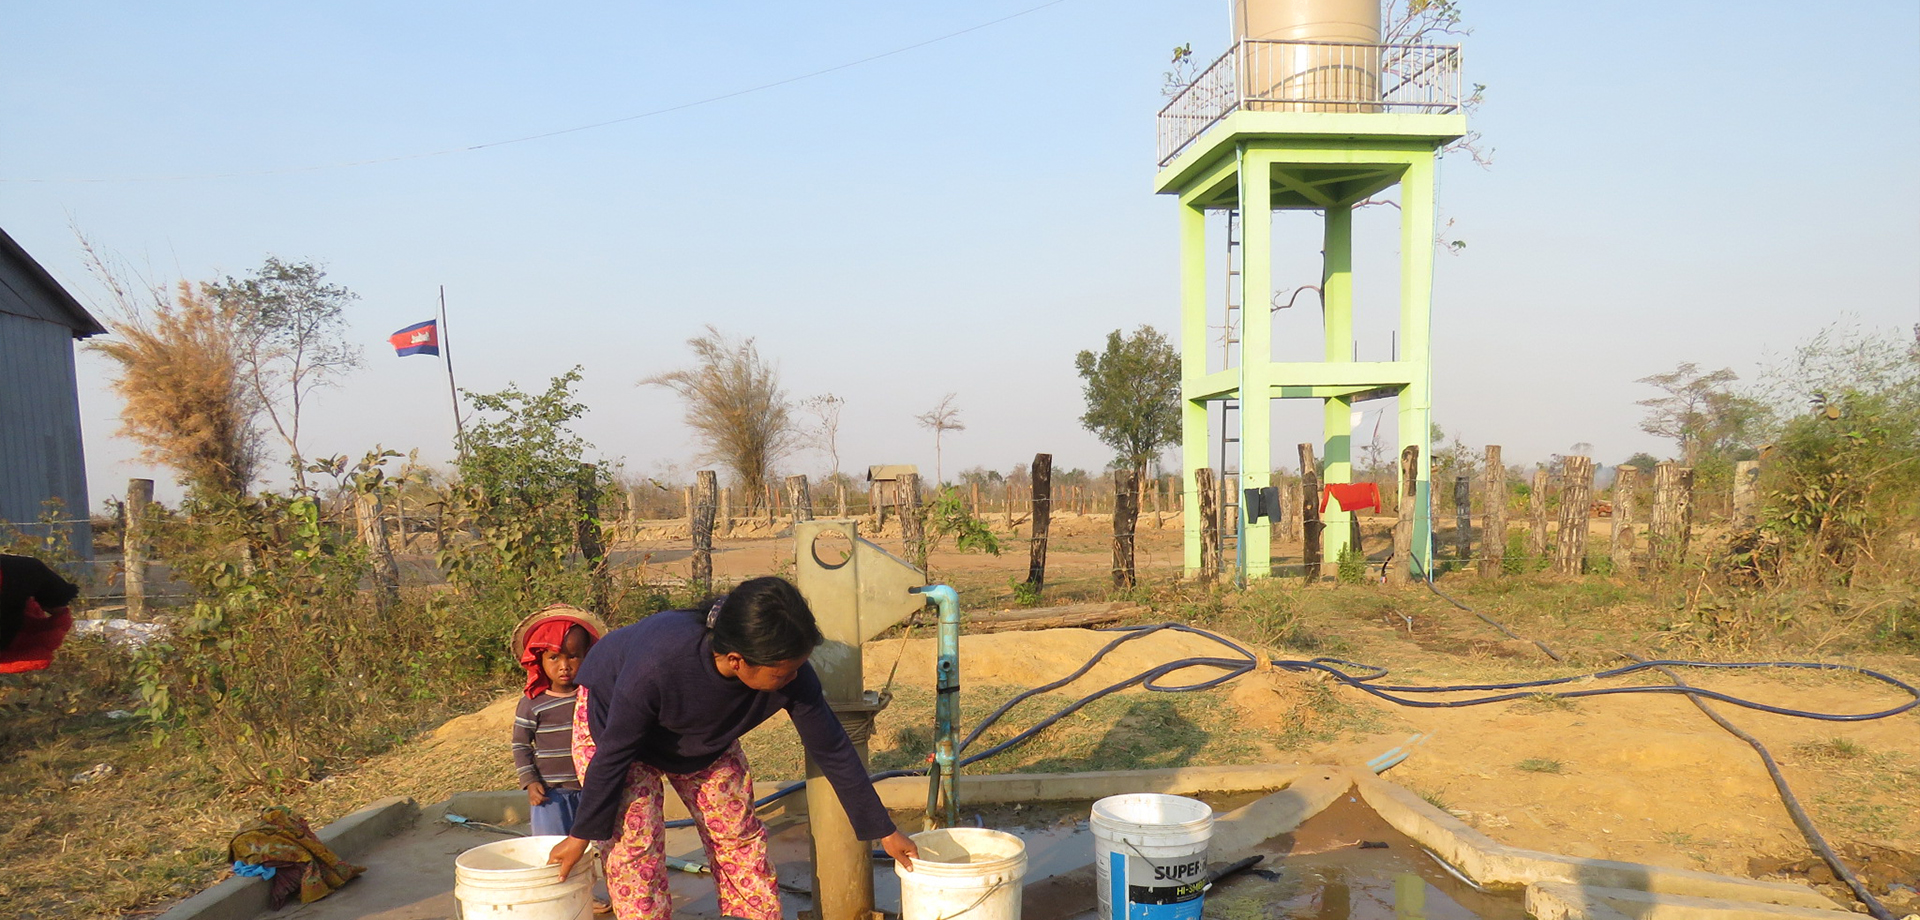 Solar Water Pump Improves Community Livelihood